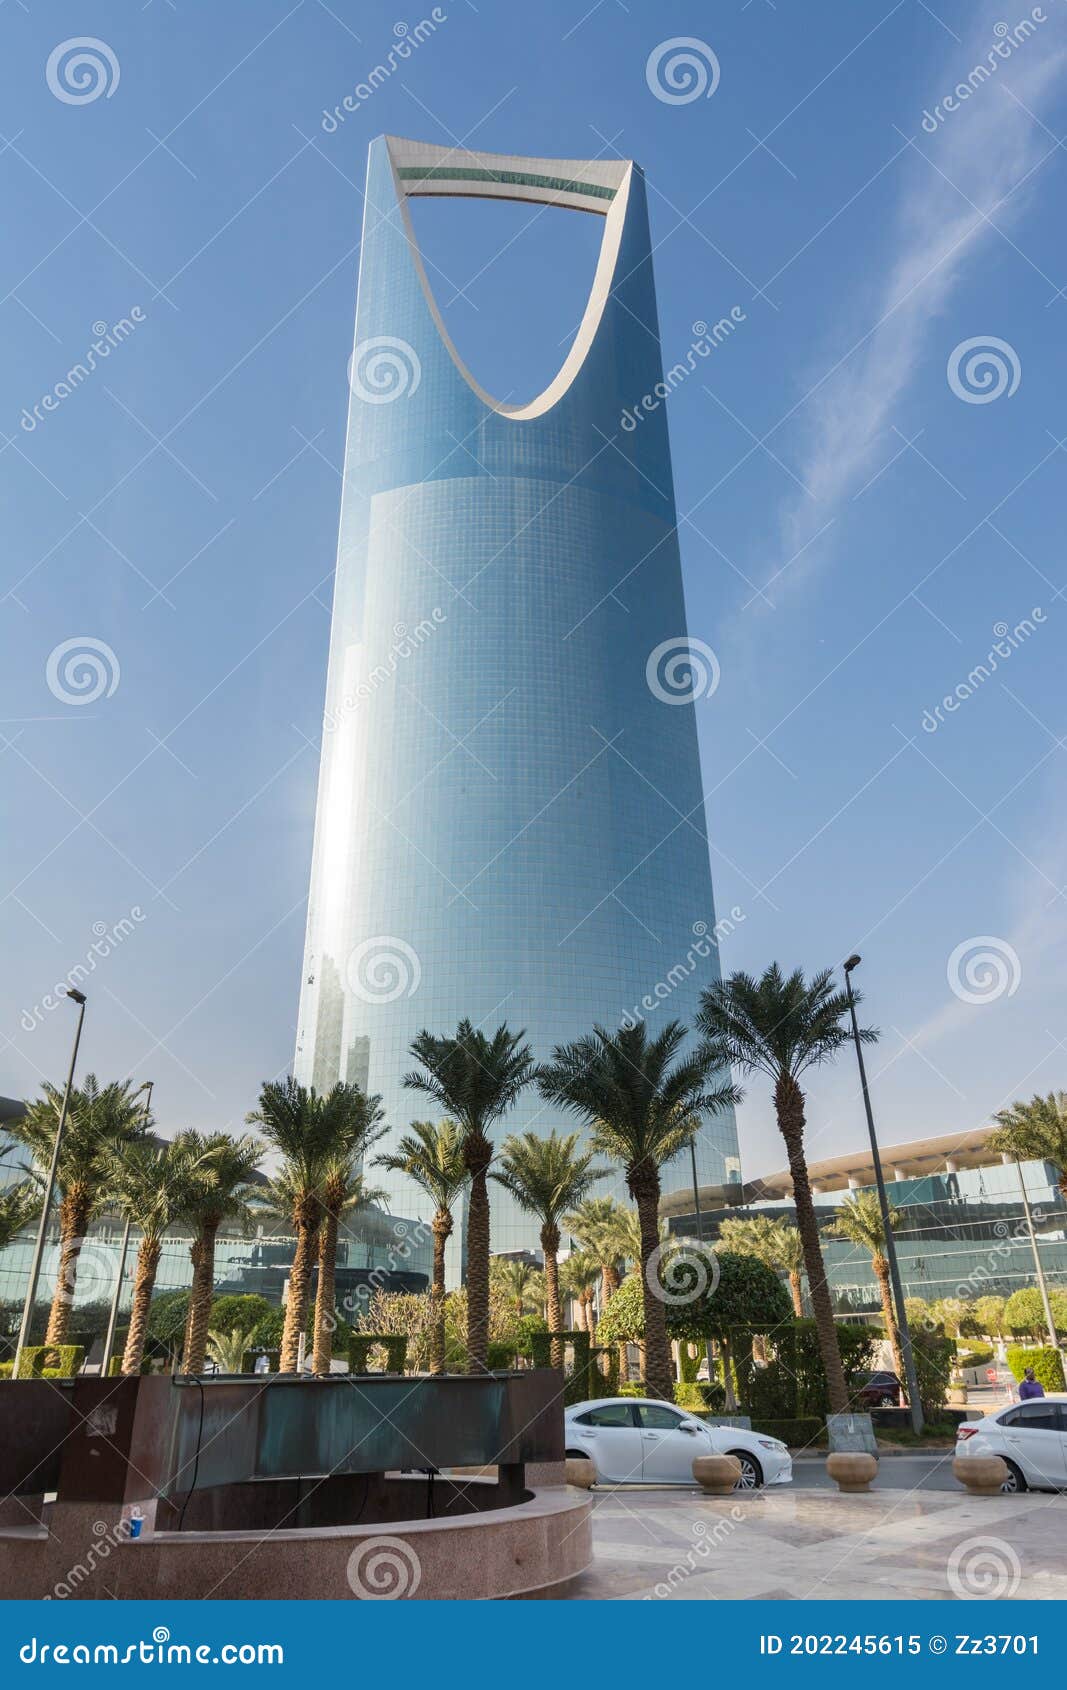 kingdom center tower or burj al mamlaka glows a blue color  again blue sky